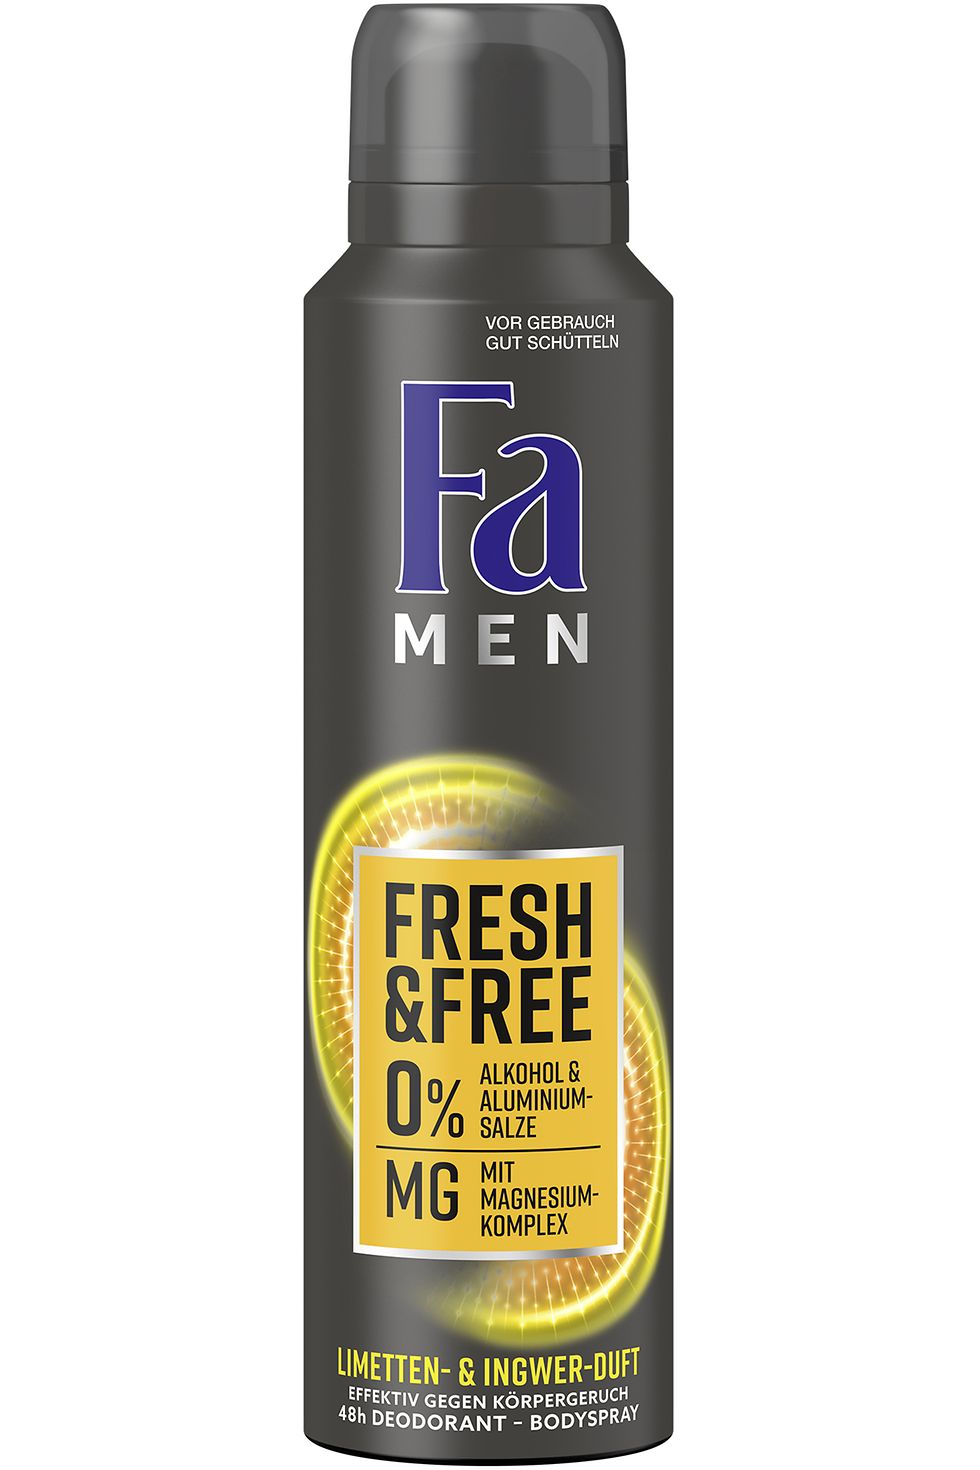 Fa Men Fresh & free Limetten- und Ingwer-Duft, 48 H Bodyspray